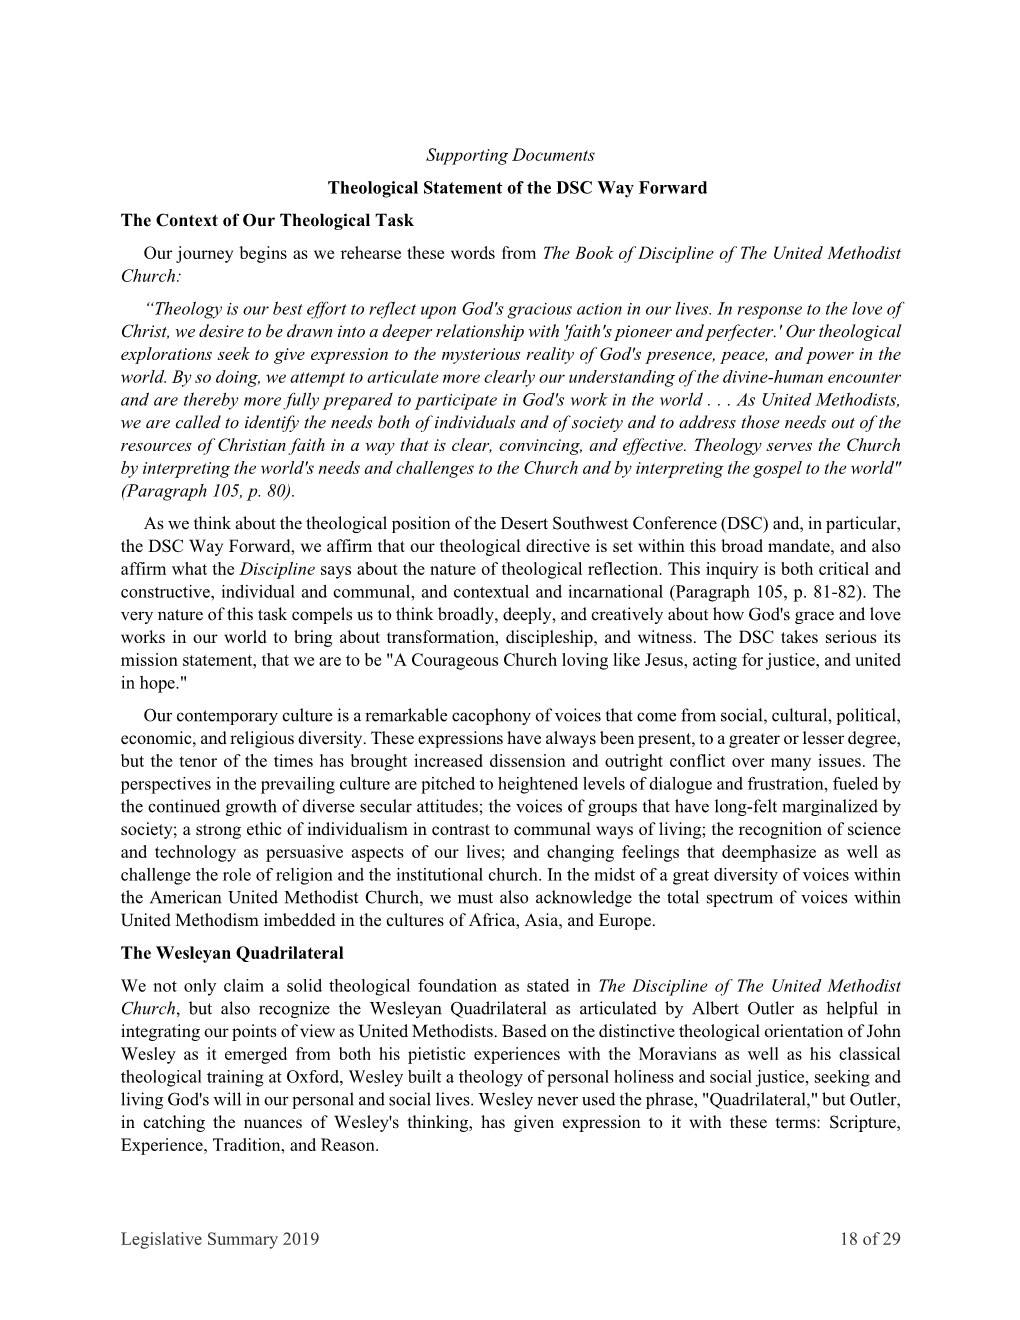 Legislative Summary 2019 18 of 29 Supporting Documents Theological